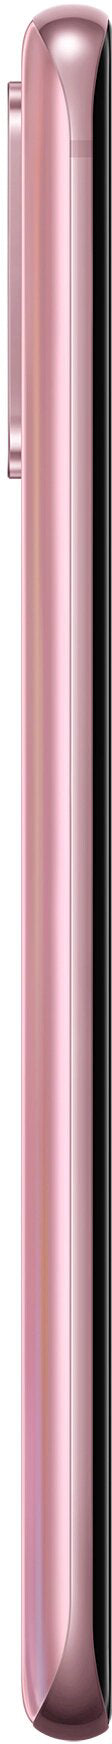 Samsung Galaxy S20 Single SIM + eSIM 8GB + 128GB - Cloud Pink